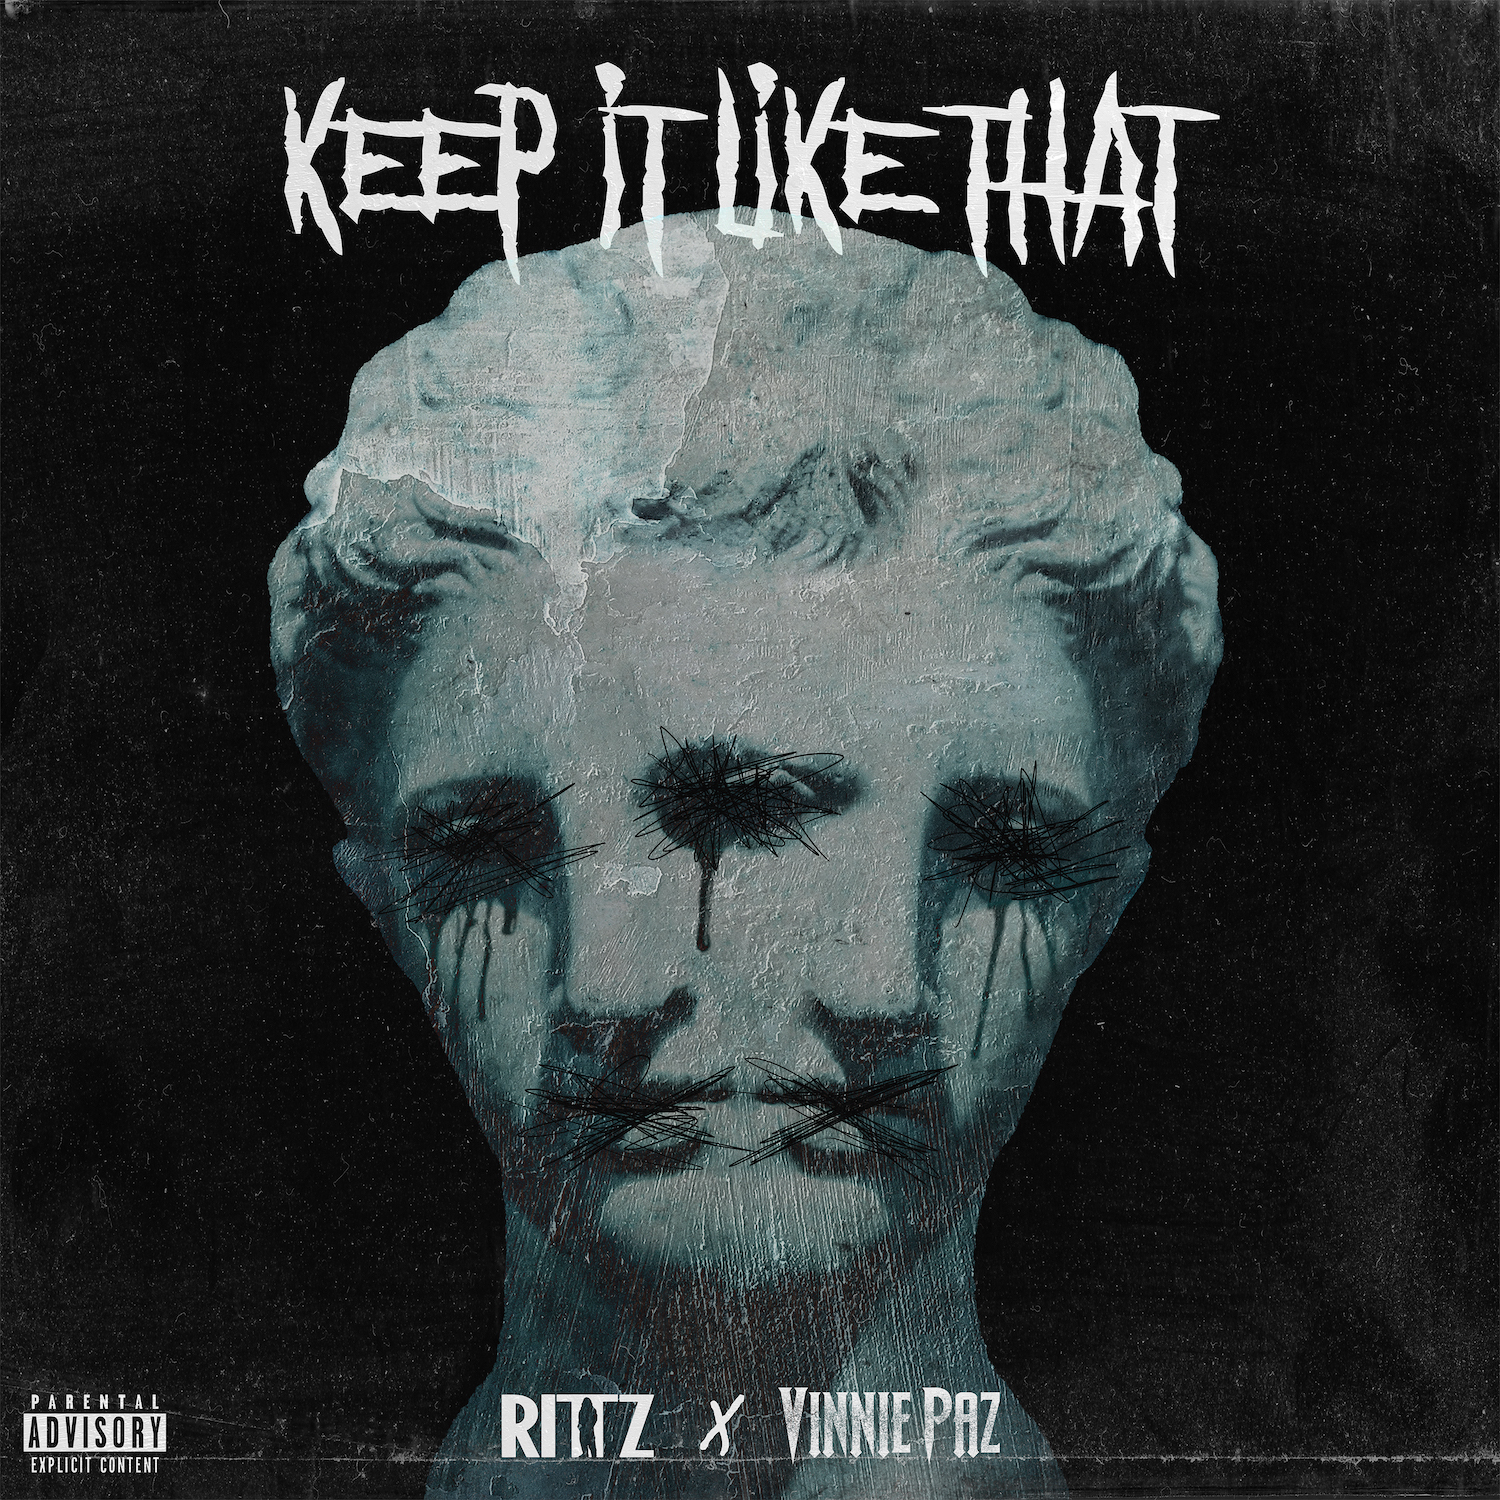 Rittz - Keep It Like That" Album Cover